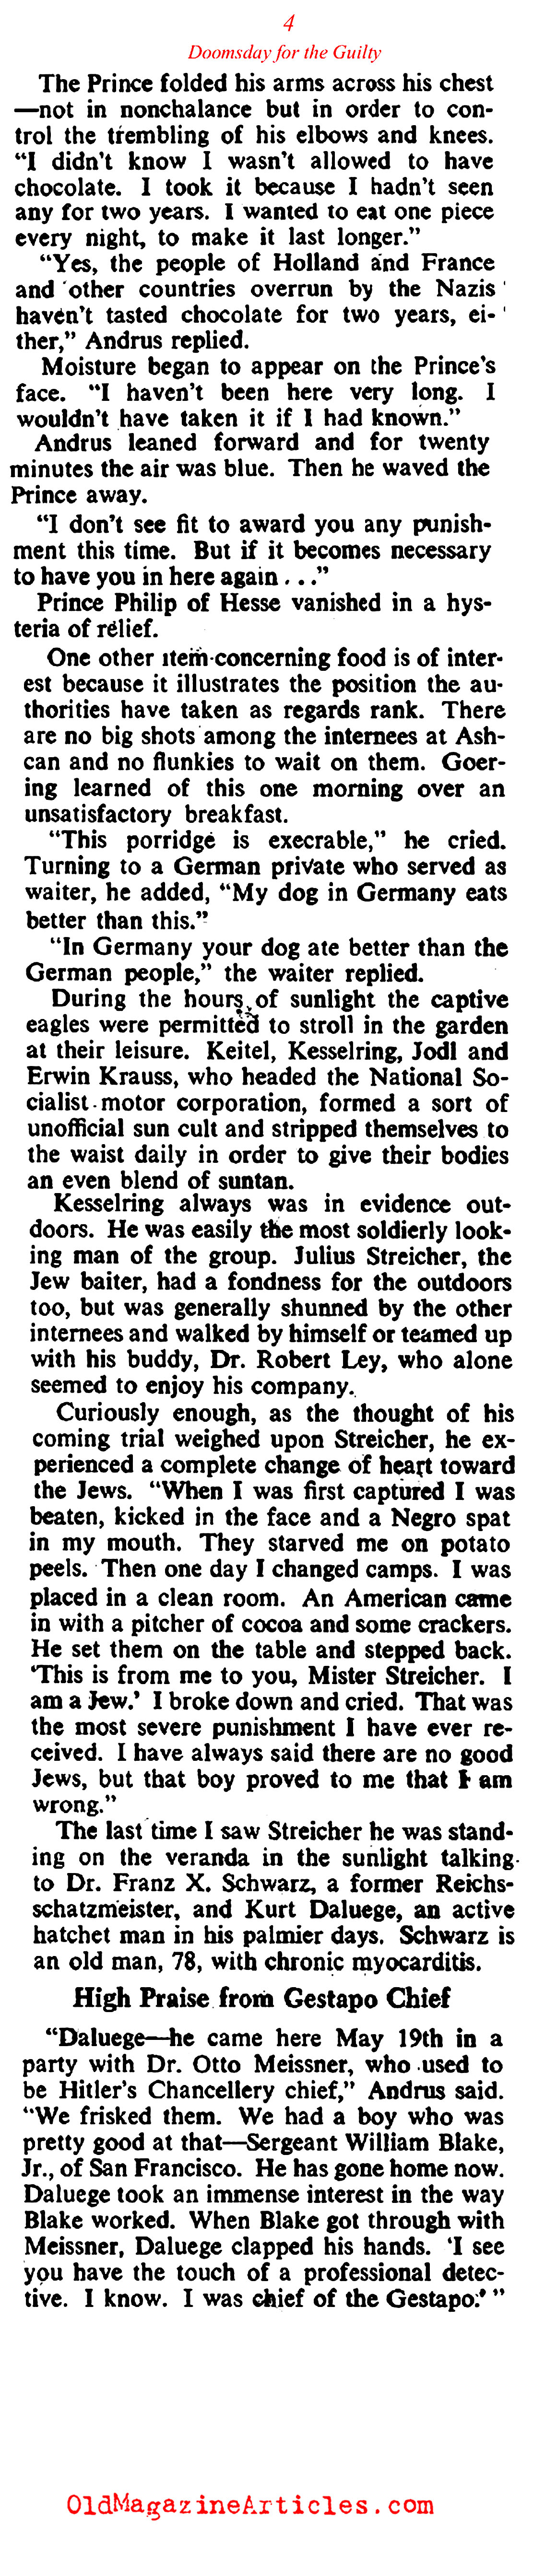 The Nazi Hierarchy in Captivity (Collier's Magazine, 1945)